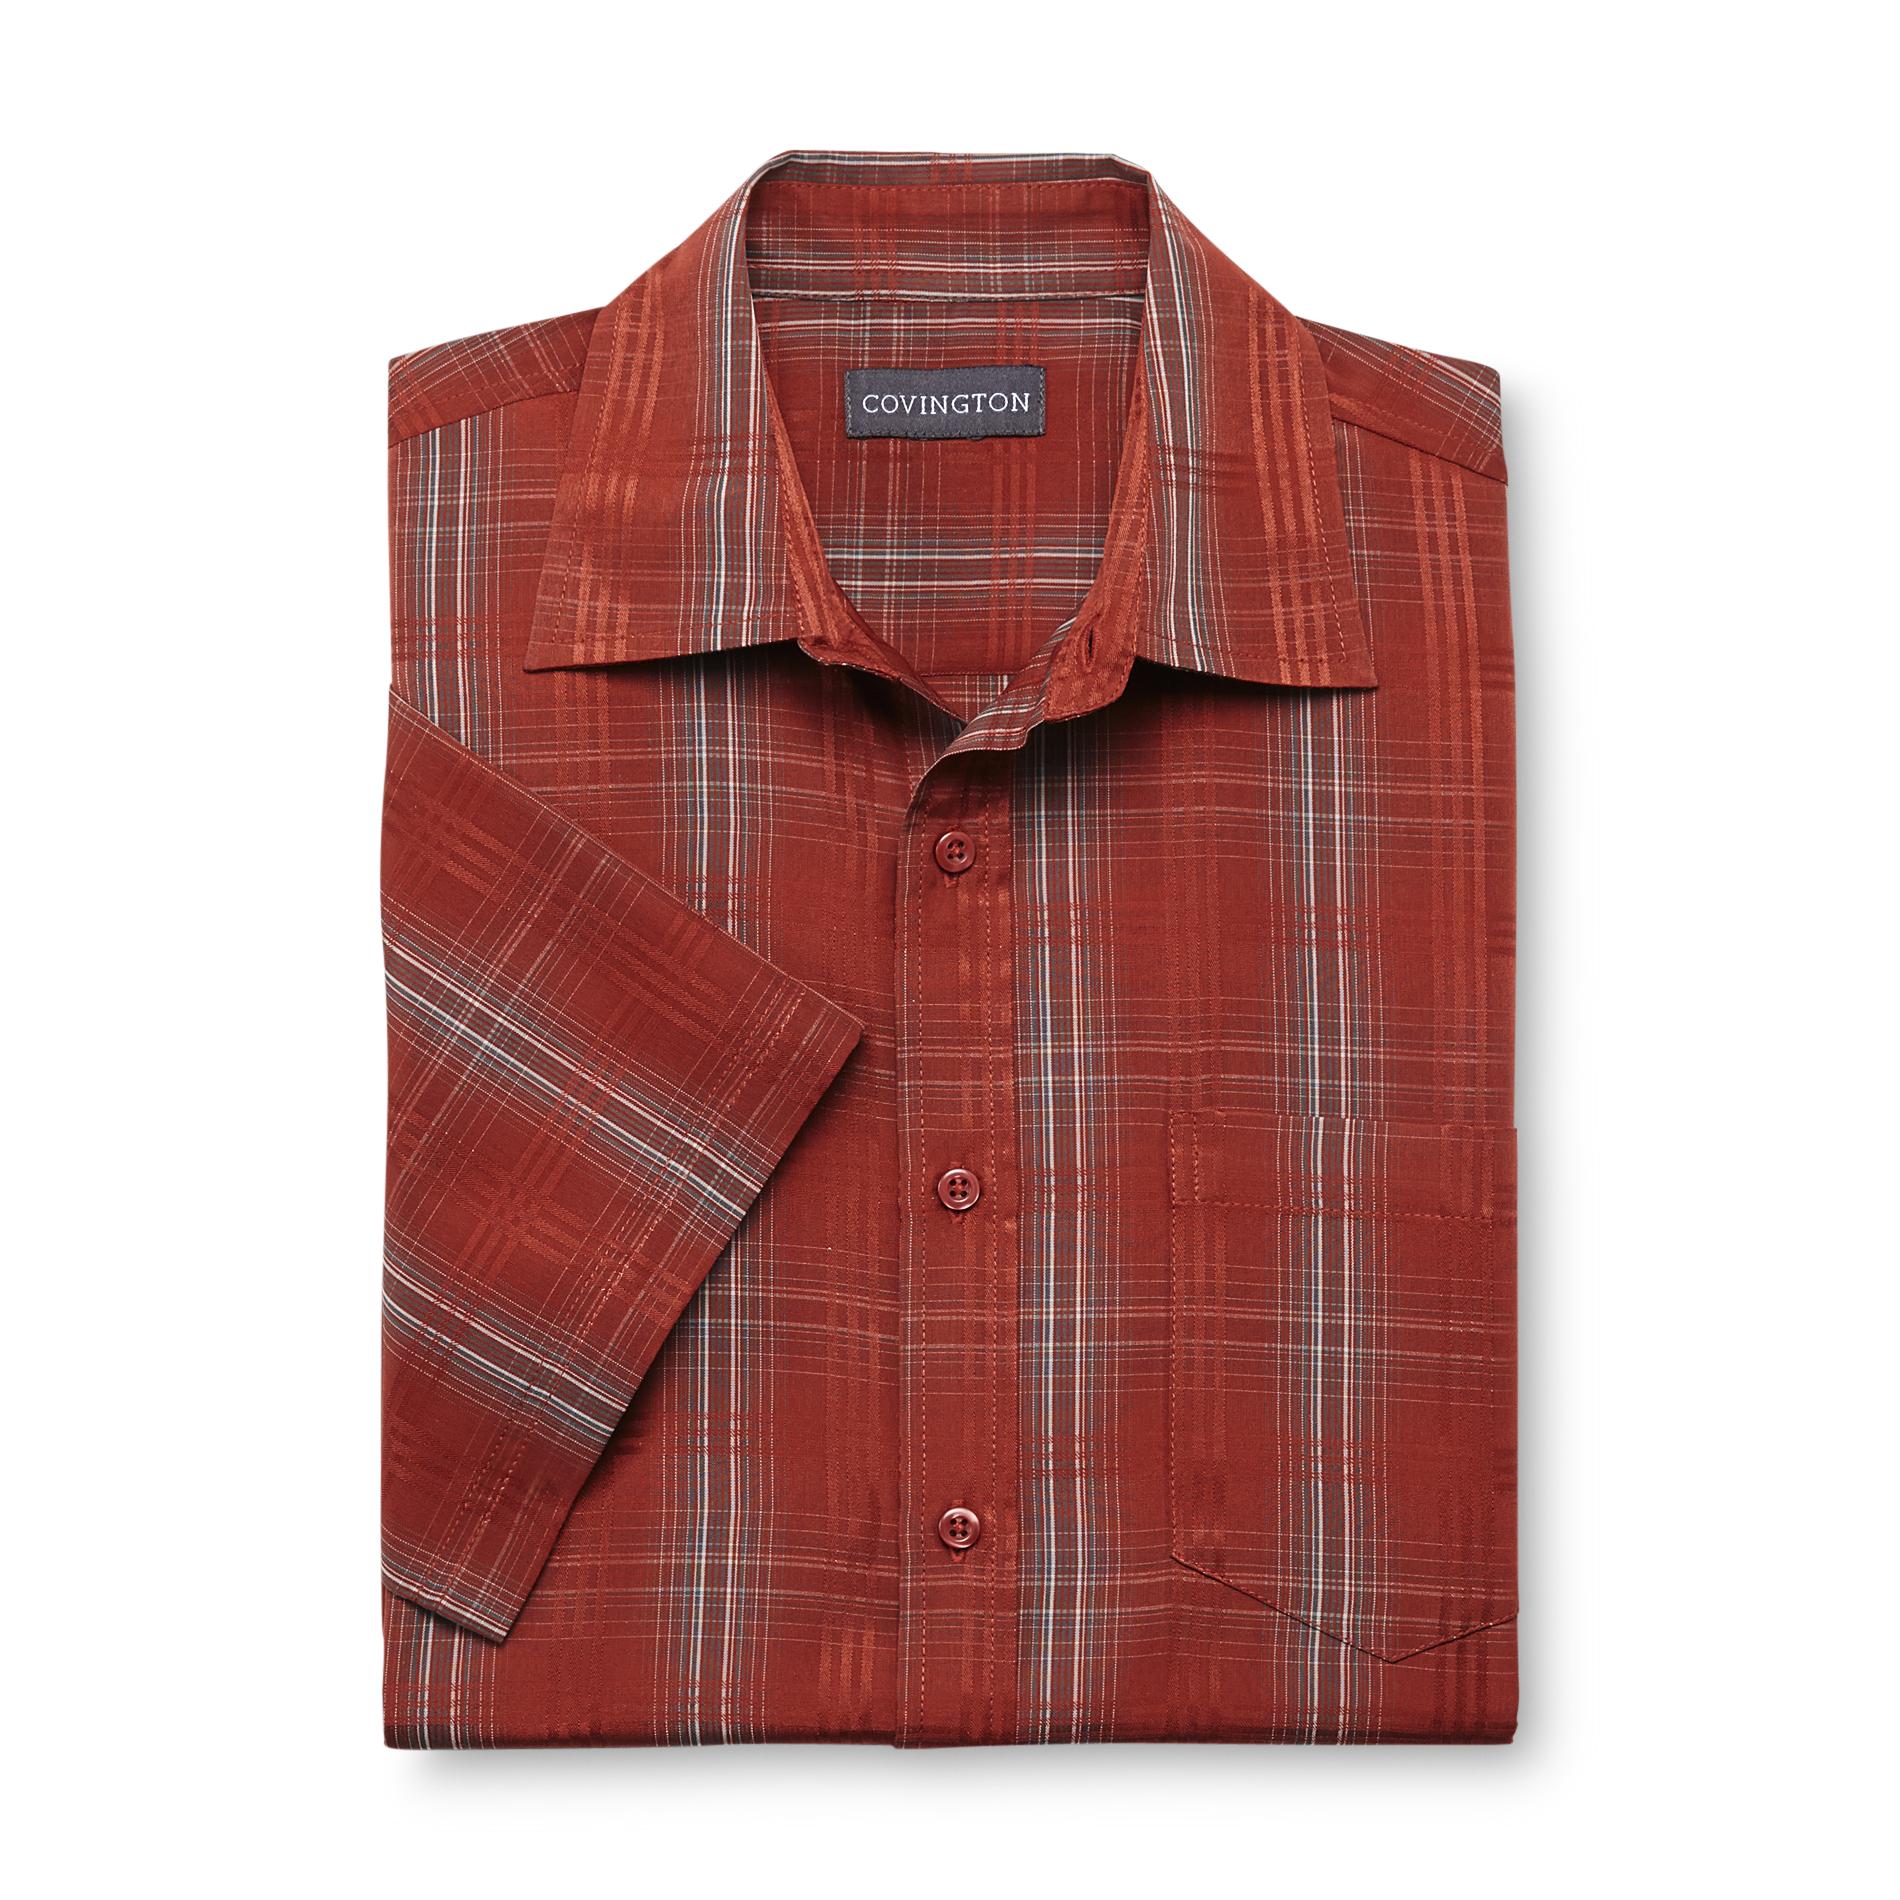 Covington Men's Short-Sleeve Woven Shirt - Plaid